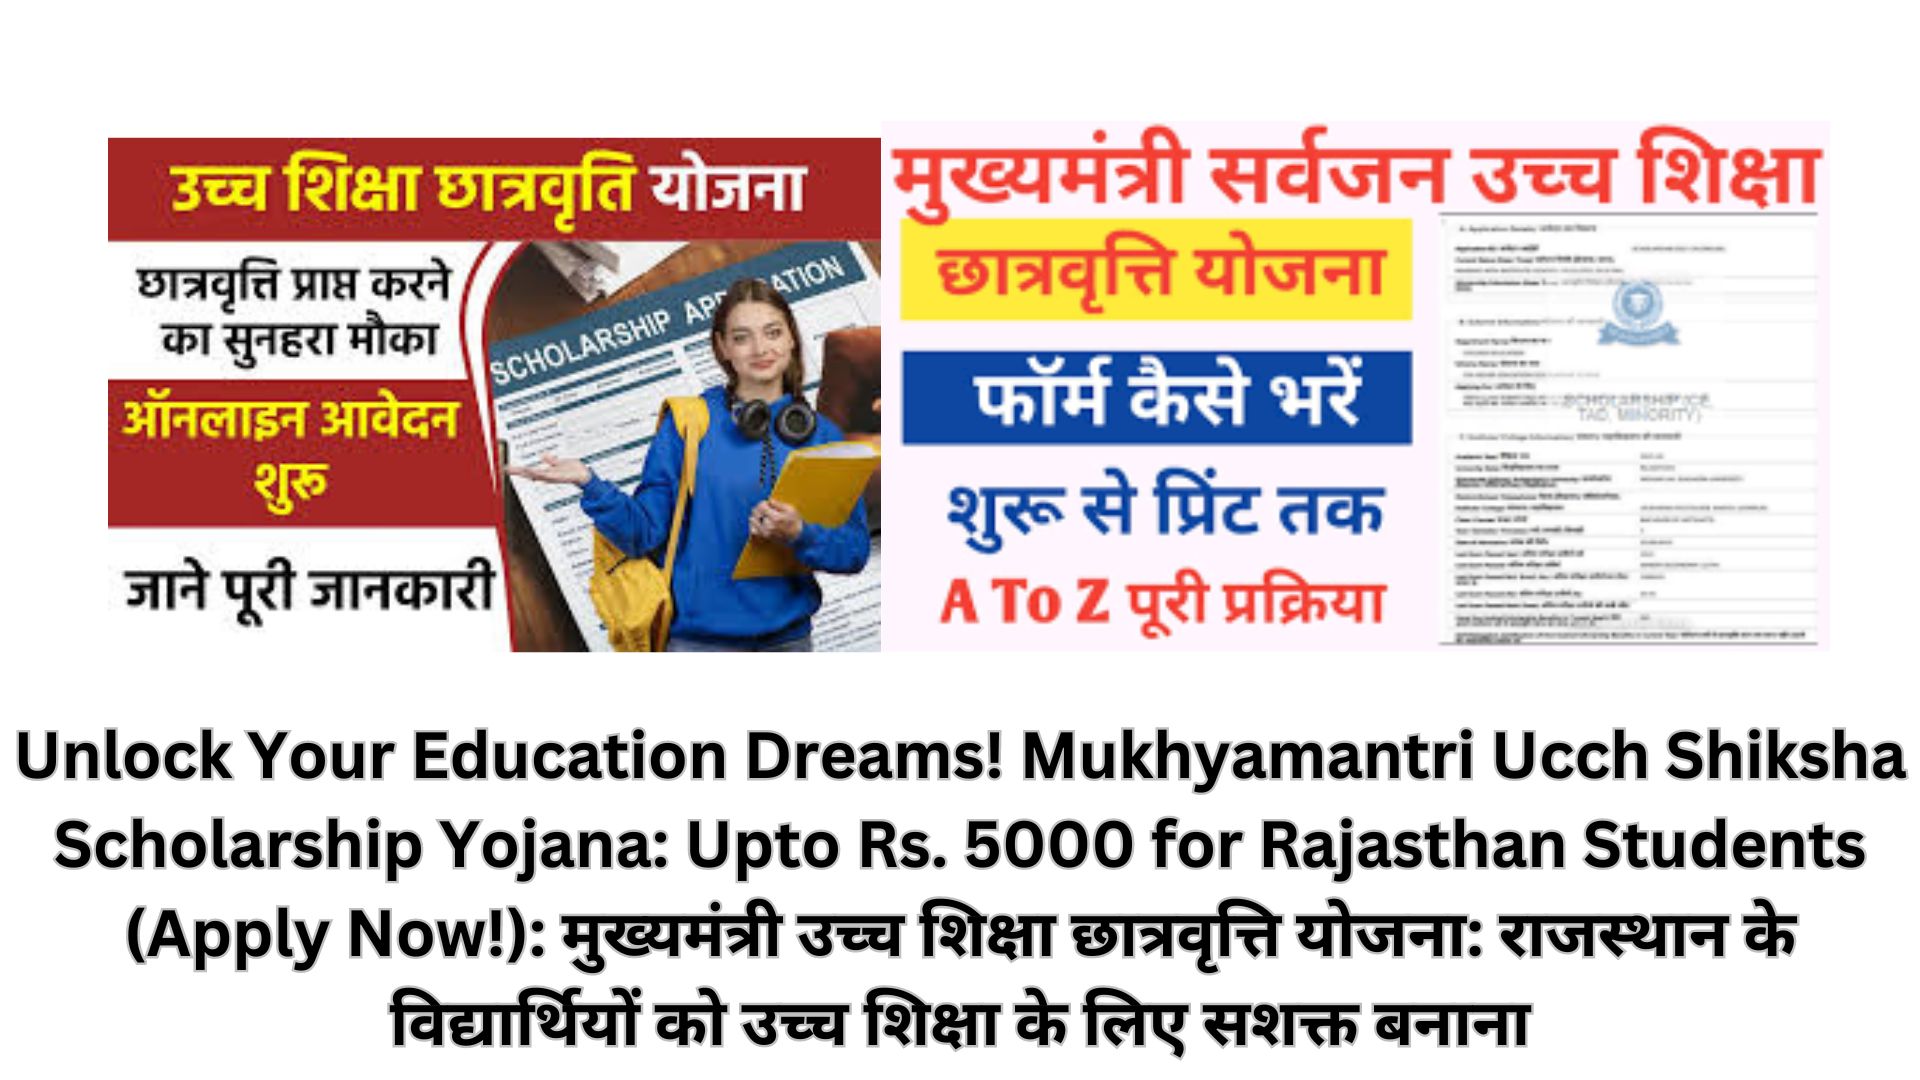 Unlock Your Education Dreams! Mukhyamantri Ucch Shiksha Scholarship Yojana: Upto Rs. 5000 for Rajasthan Students (Apply Now!): मुख्यमंत्री उच्च शिक्षा छात्रवृत्ति योजना: राजस्थान के विद्यार्थियों को उच्च शिक्षा के लिए सशक्त बनाना